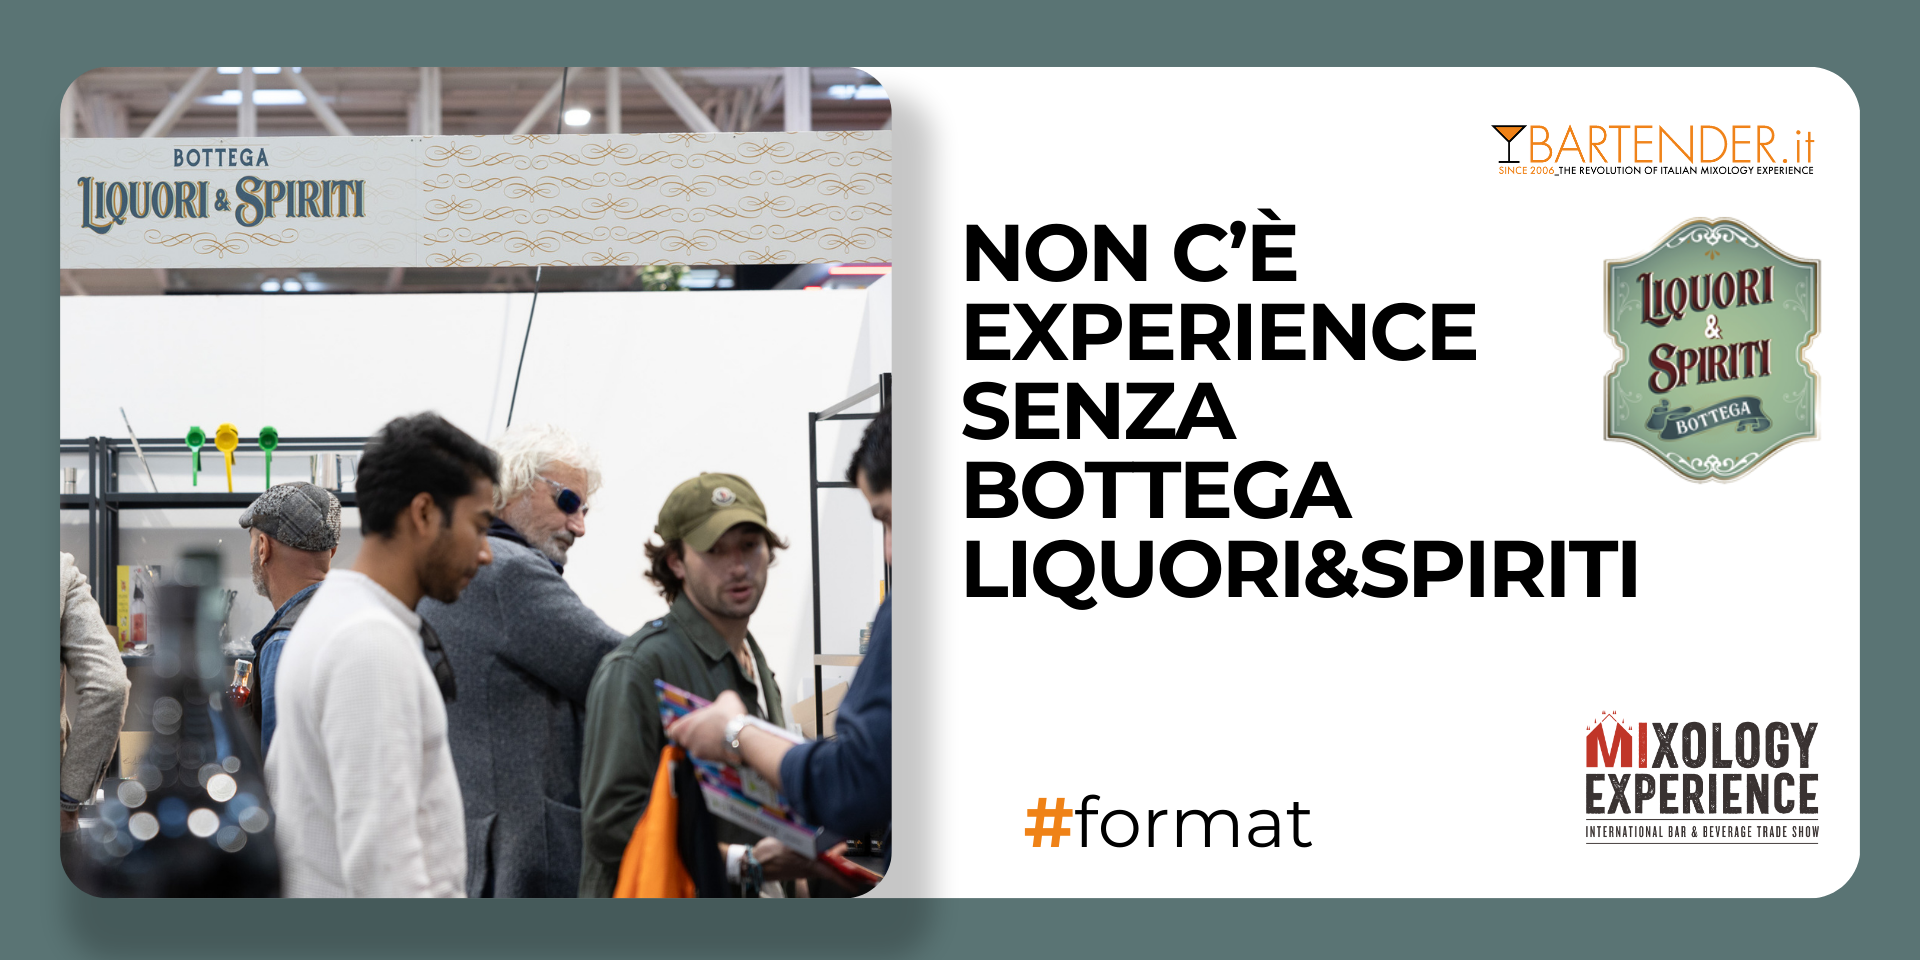 There is no Experience without Bottega Liquori&Spiriti